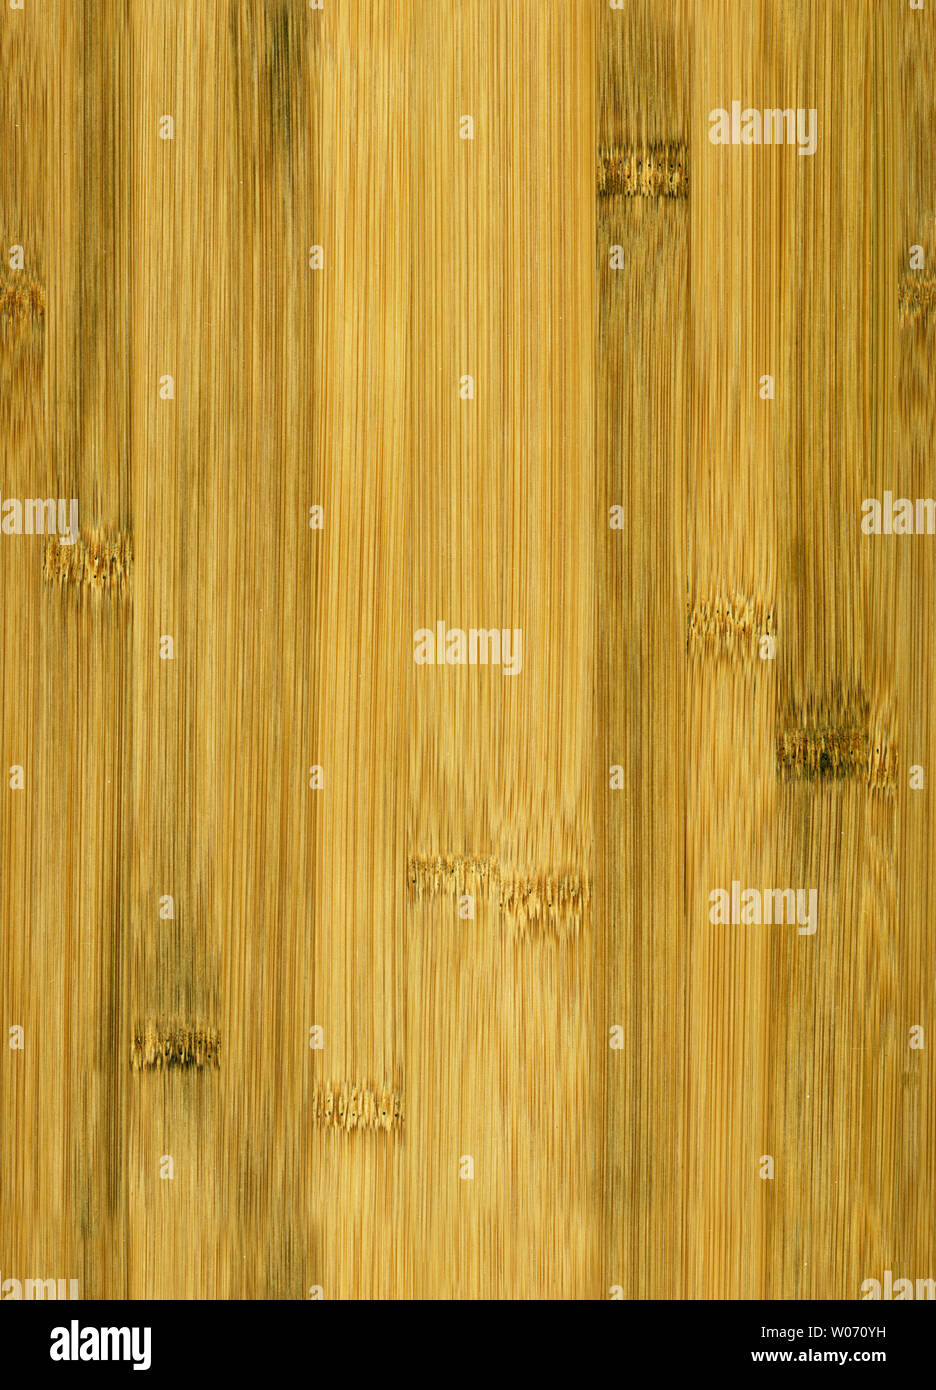 High Resolution Seamless Bamboo Texture Stock Photo Alamy